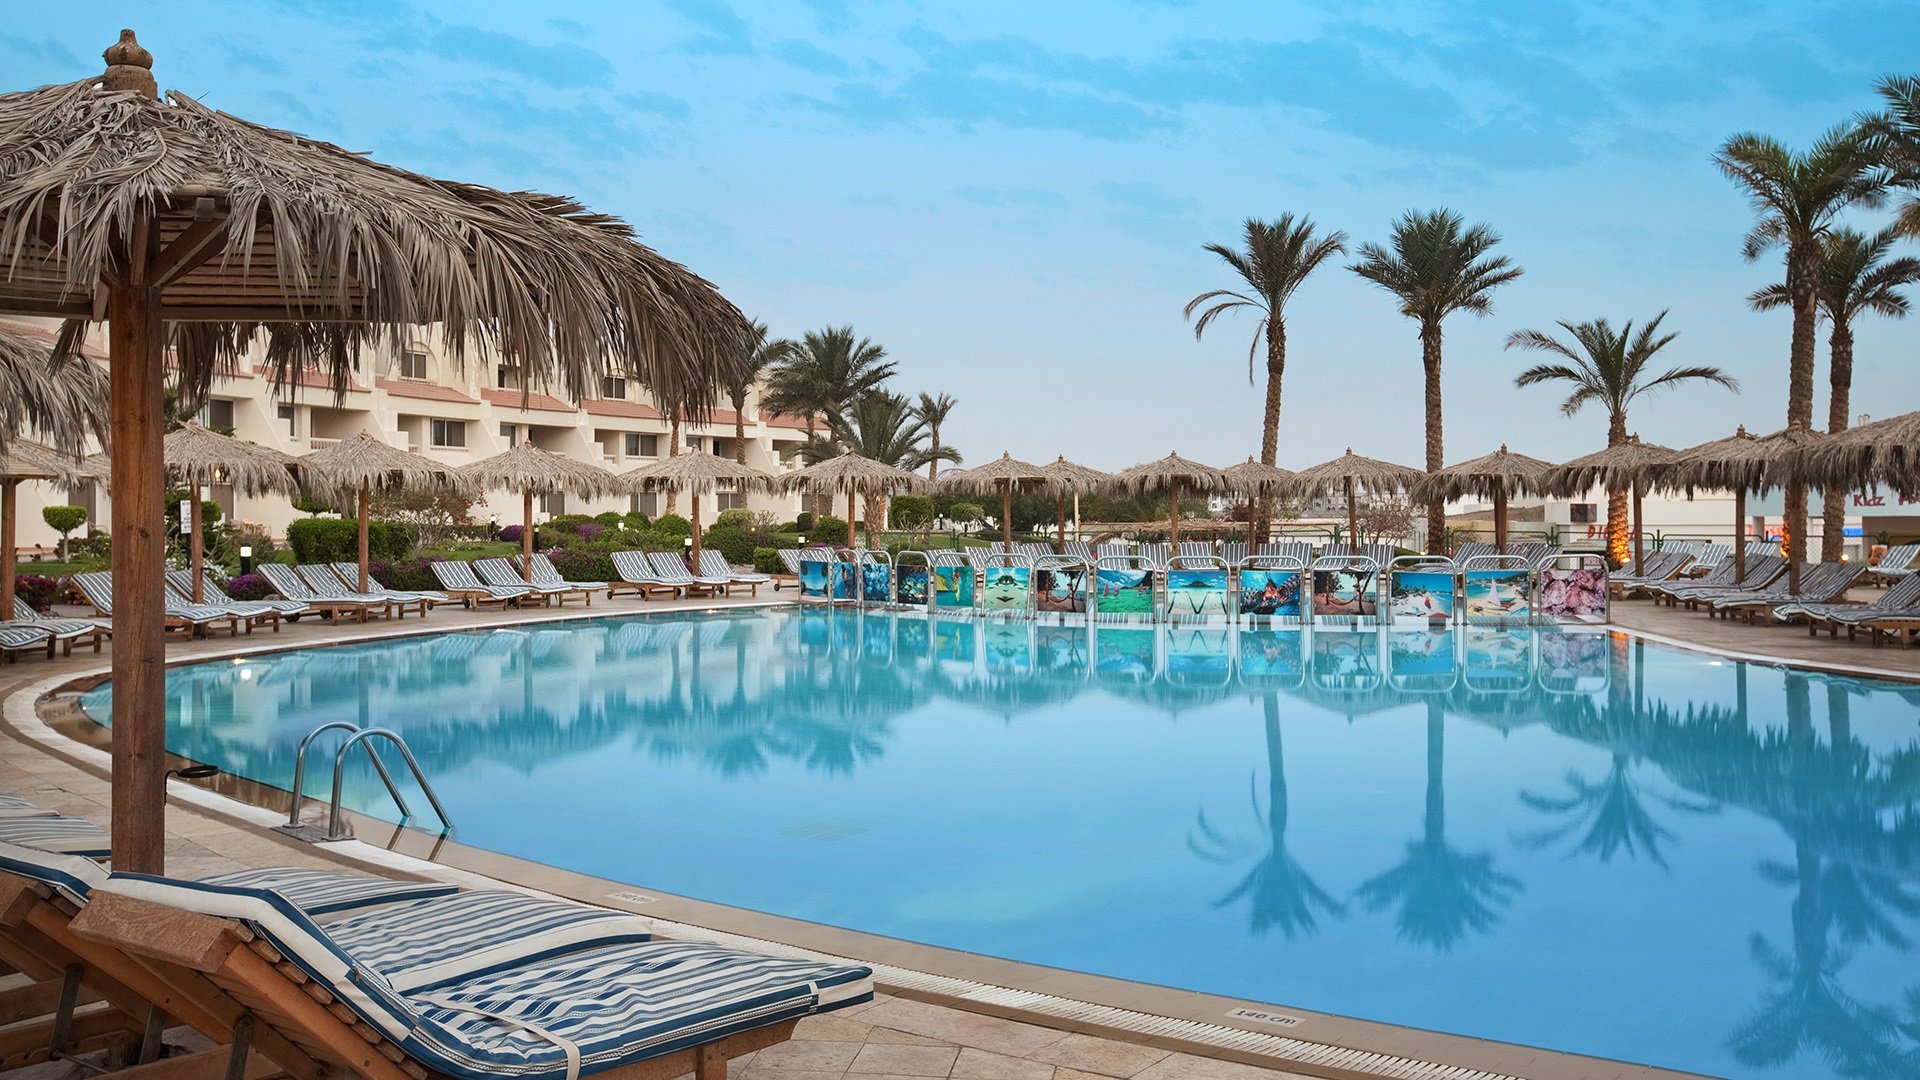 Hotel Hilton Long Beach Resort - Hurghada, Egypt - Holidays, Reviews